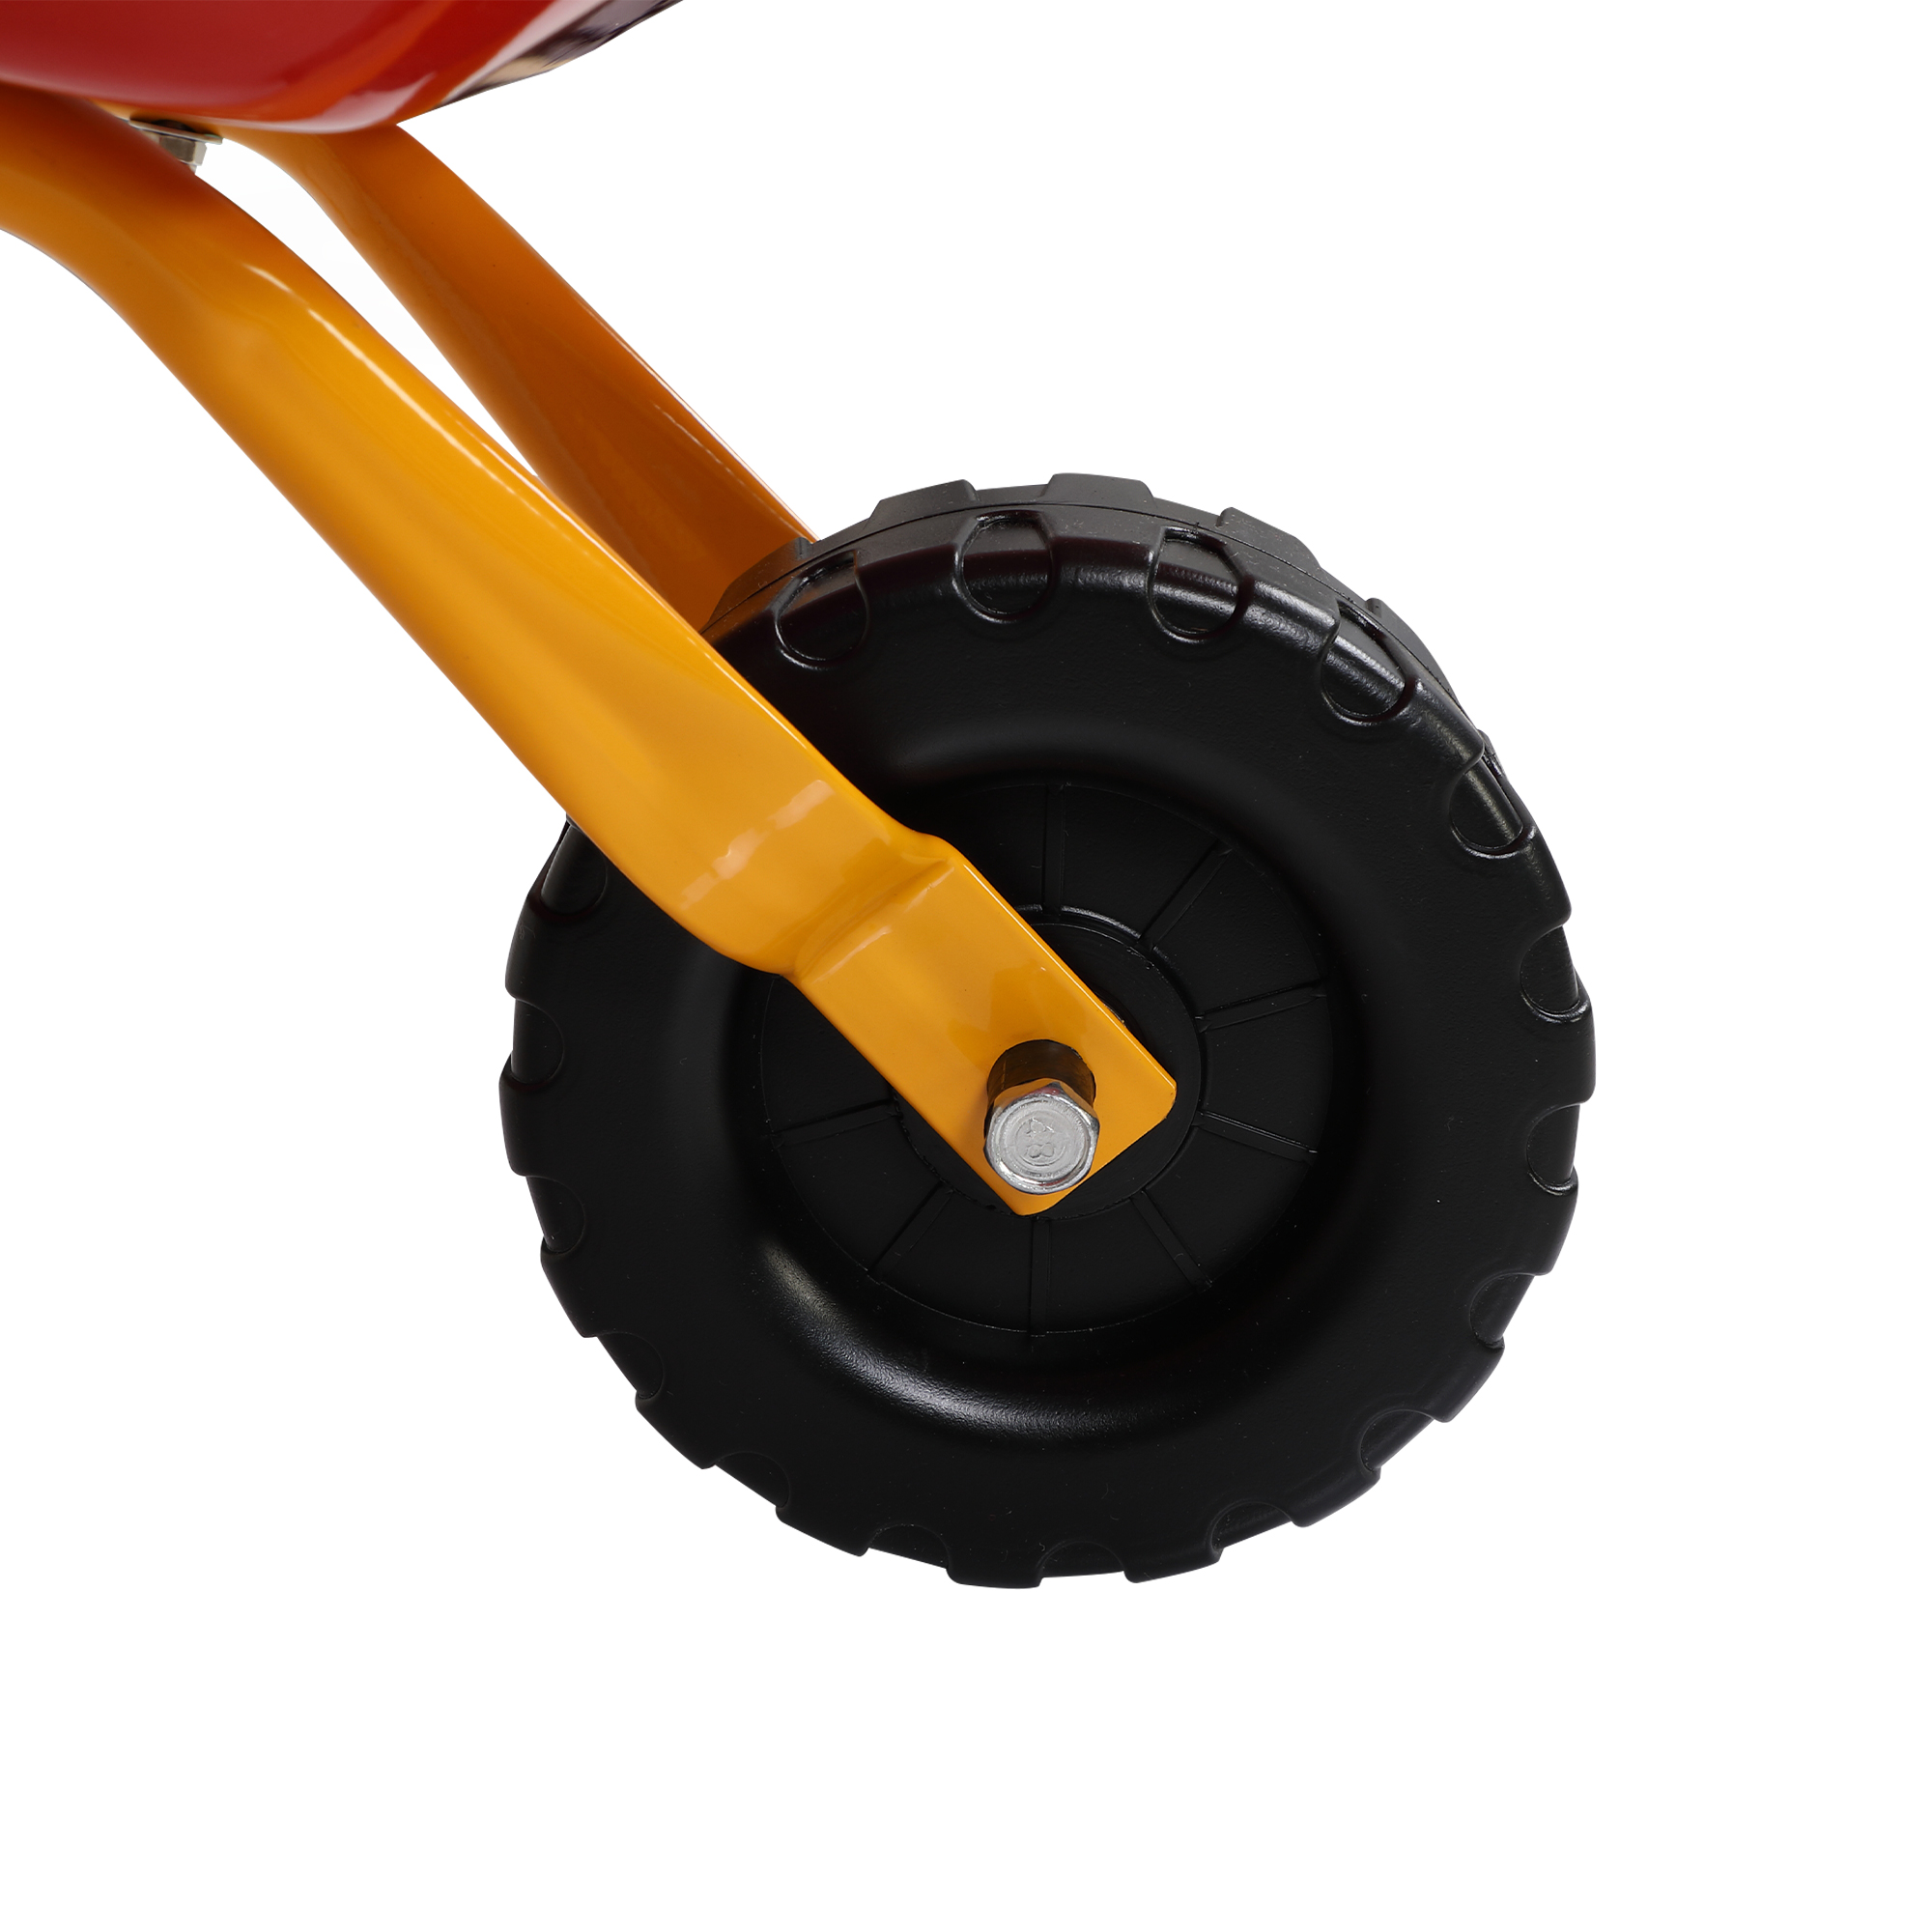 Veryke Kids Wheelbarrow, Outdoor Kids Toy Wheelbarrow w/Steel Tray and Rubber Hand Grips, Red - image 5 of 8